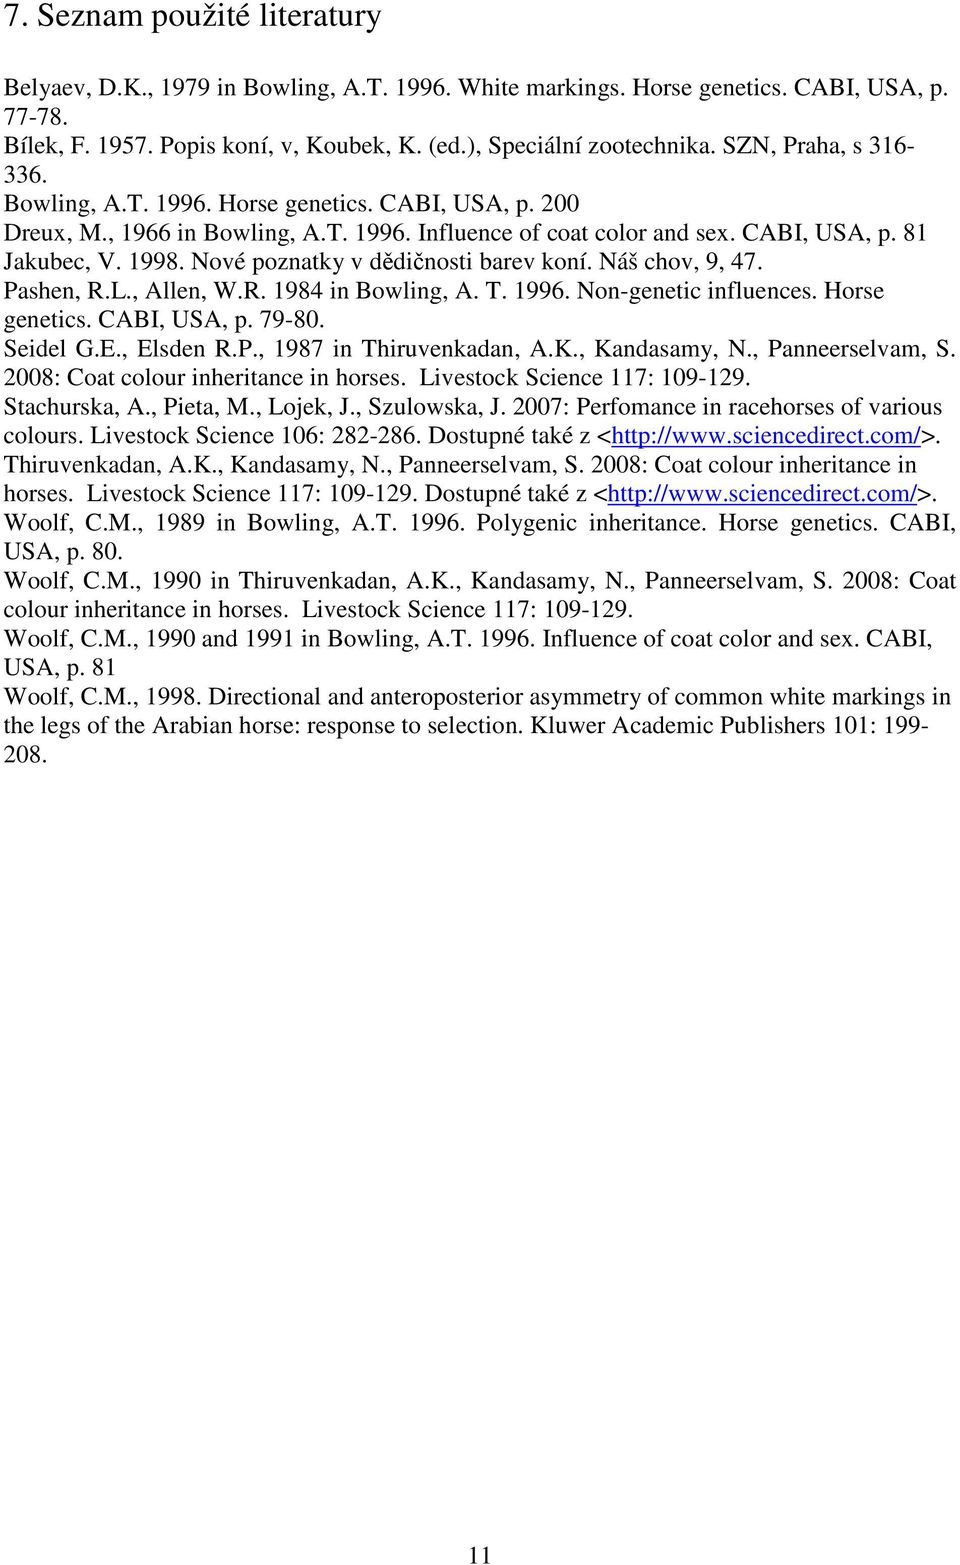 Nové poznatky v dědičnosti barev koní. Náš chov, 9, 47. Pashen, R.L., Allen, W.R. 1984 in Bowling, A. T. 1996. Non-genetic influences. Horse genetics. CABI, USA, p. 79-80. Seidel G.E., Elsden R.P., 1987 in Thiruvenkadan, A.